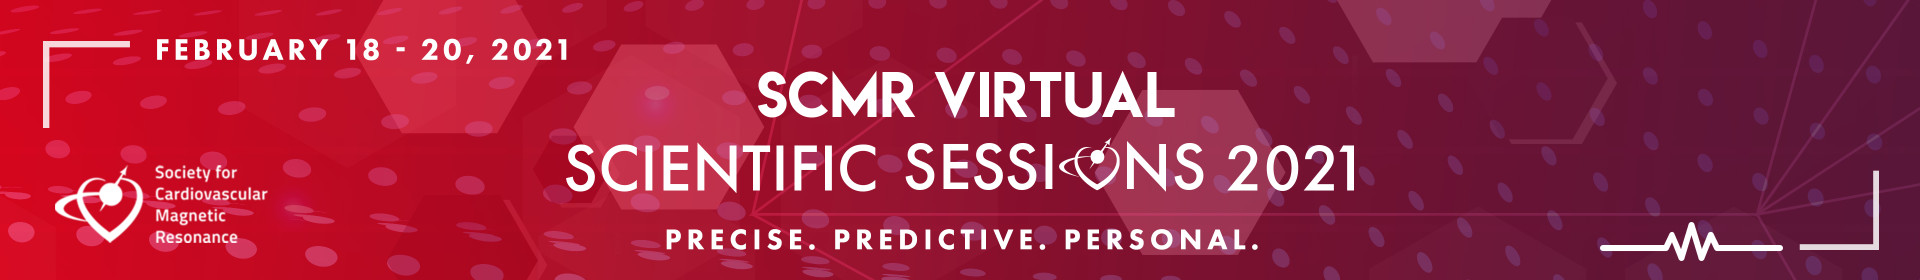 SCMR Virtual Scientific Sessions 2021 Event Banner